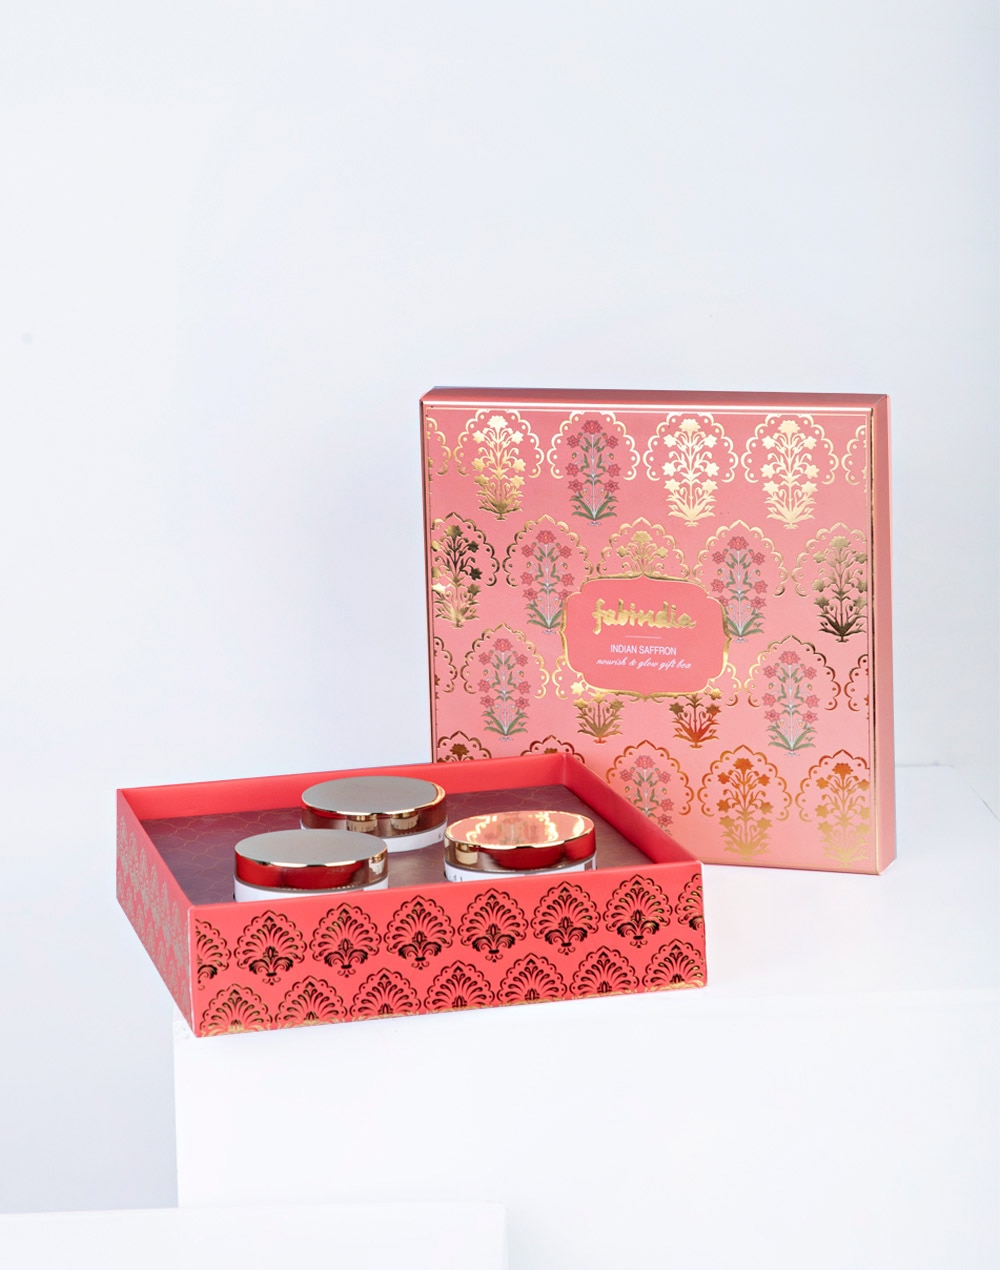 Indian Saffron Face Care Gift Box -150ml